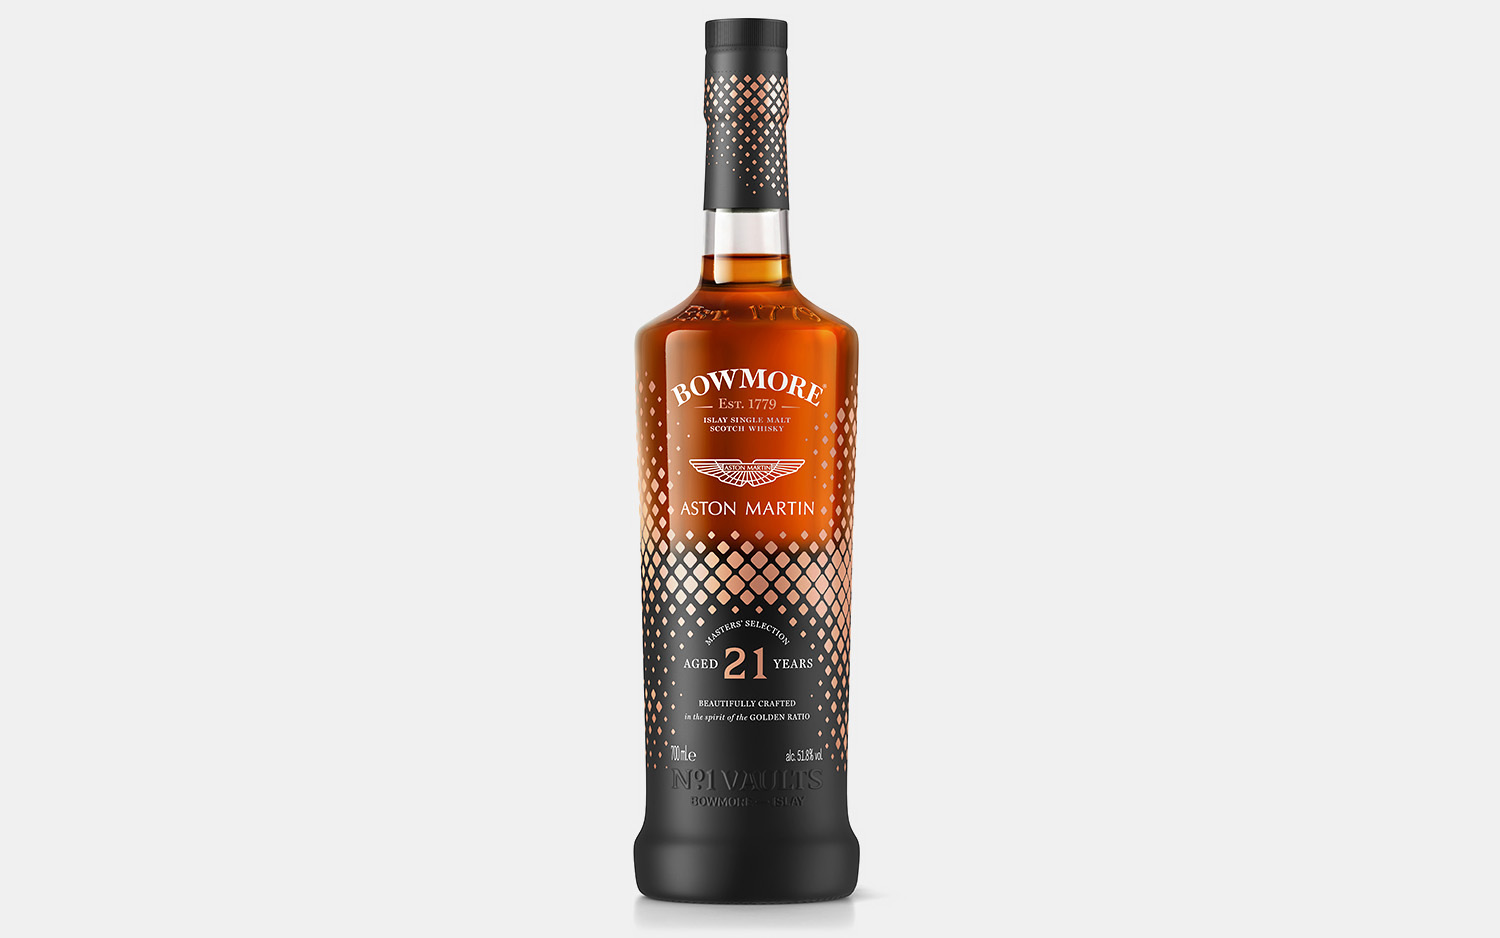 Bowmore & Aston Martin Masters’ Selection Scotch Whisky